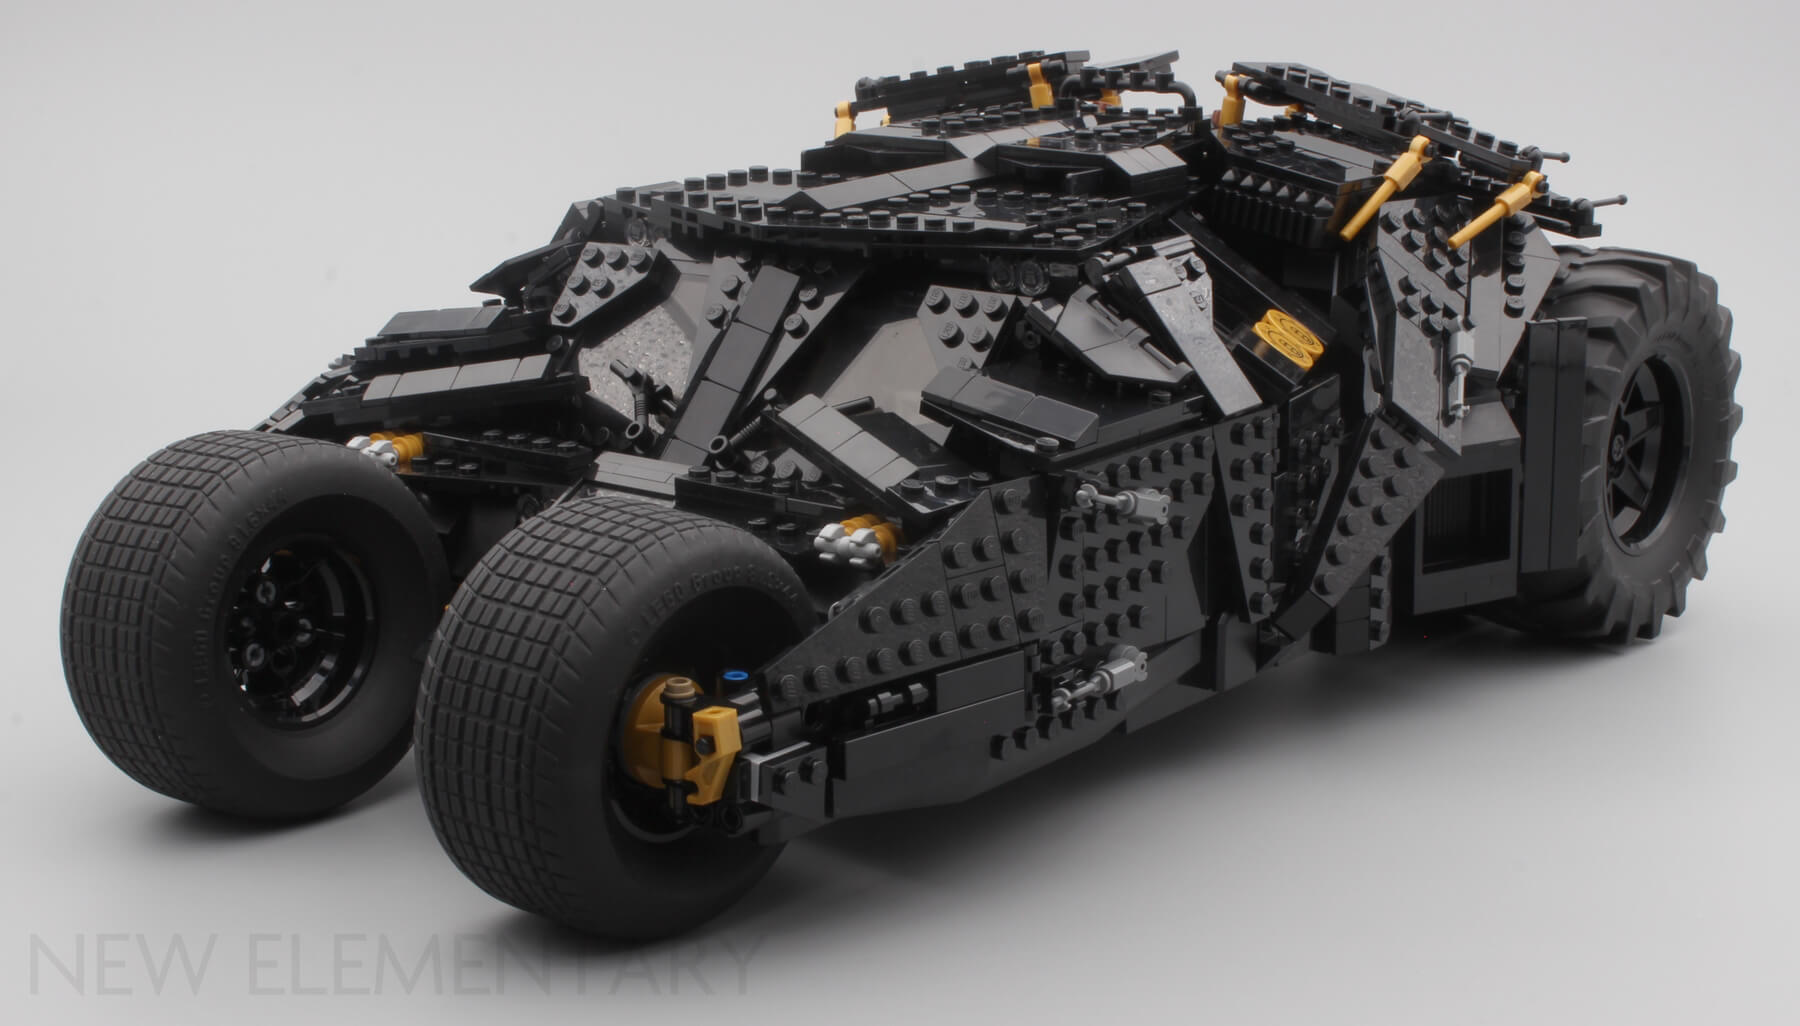 LEGO Super Heroes 76240 DC Batman Batmobilen Tumbler